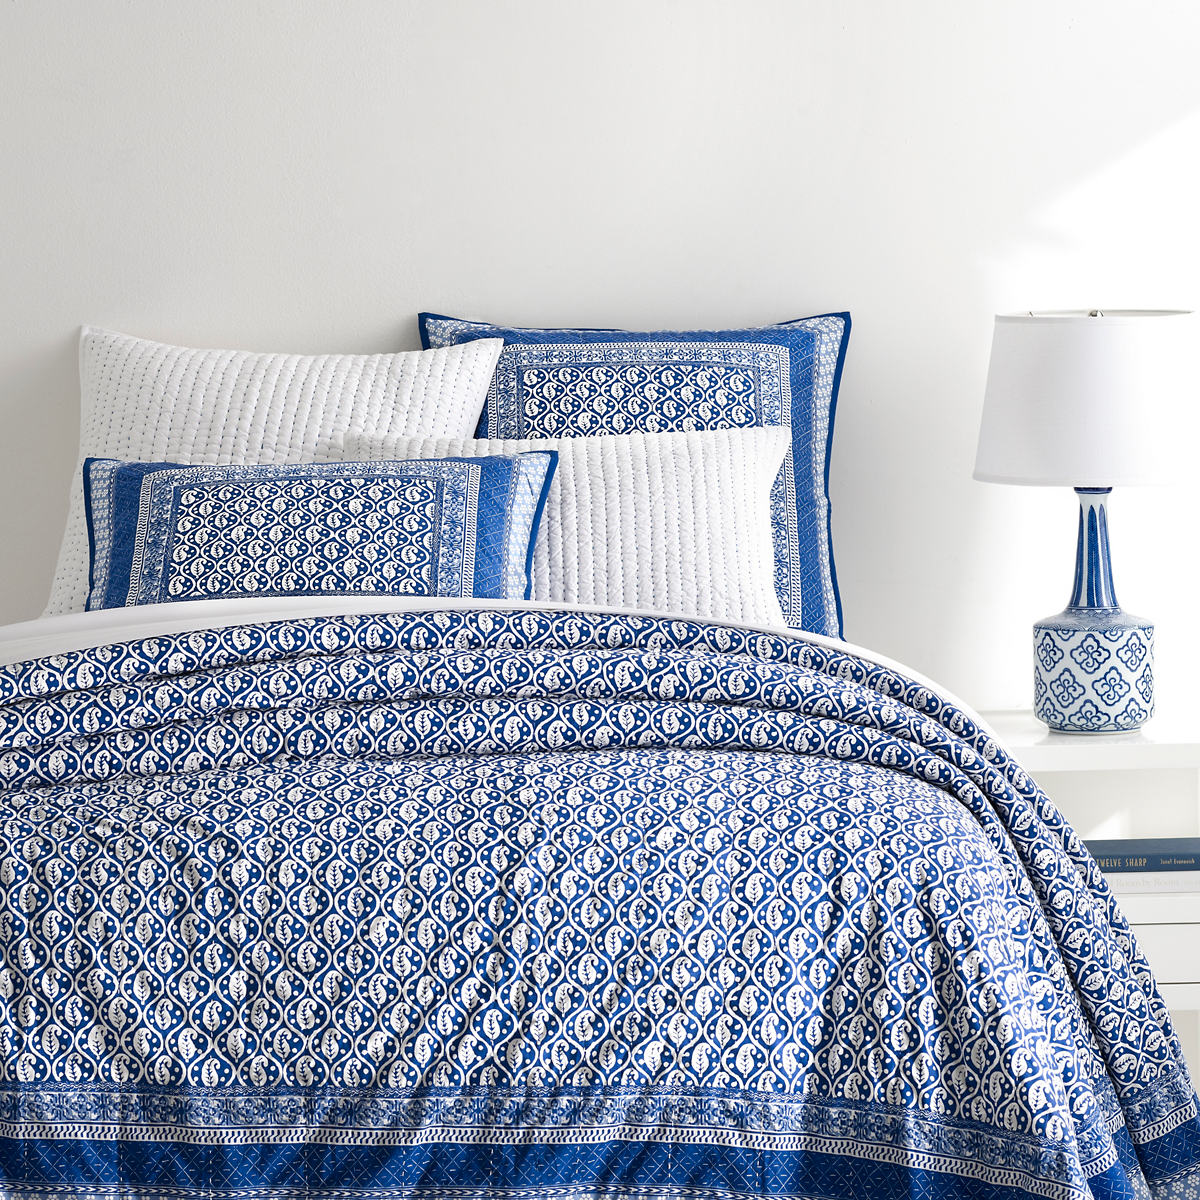 Batik Blue Coverlet Pine Cone Hill, Blue Bedspreads Queen Size